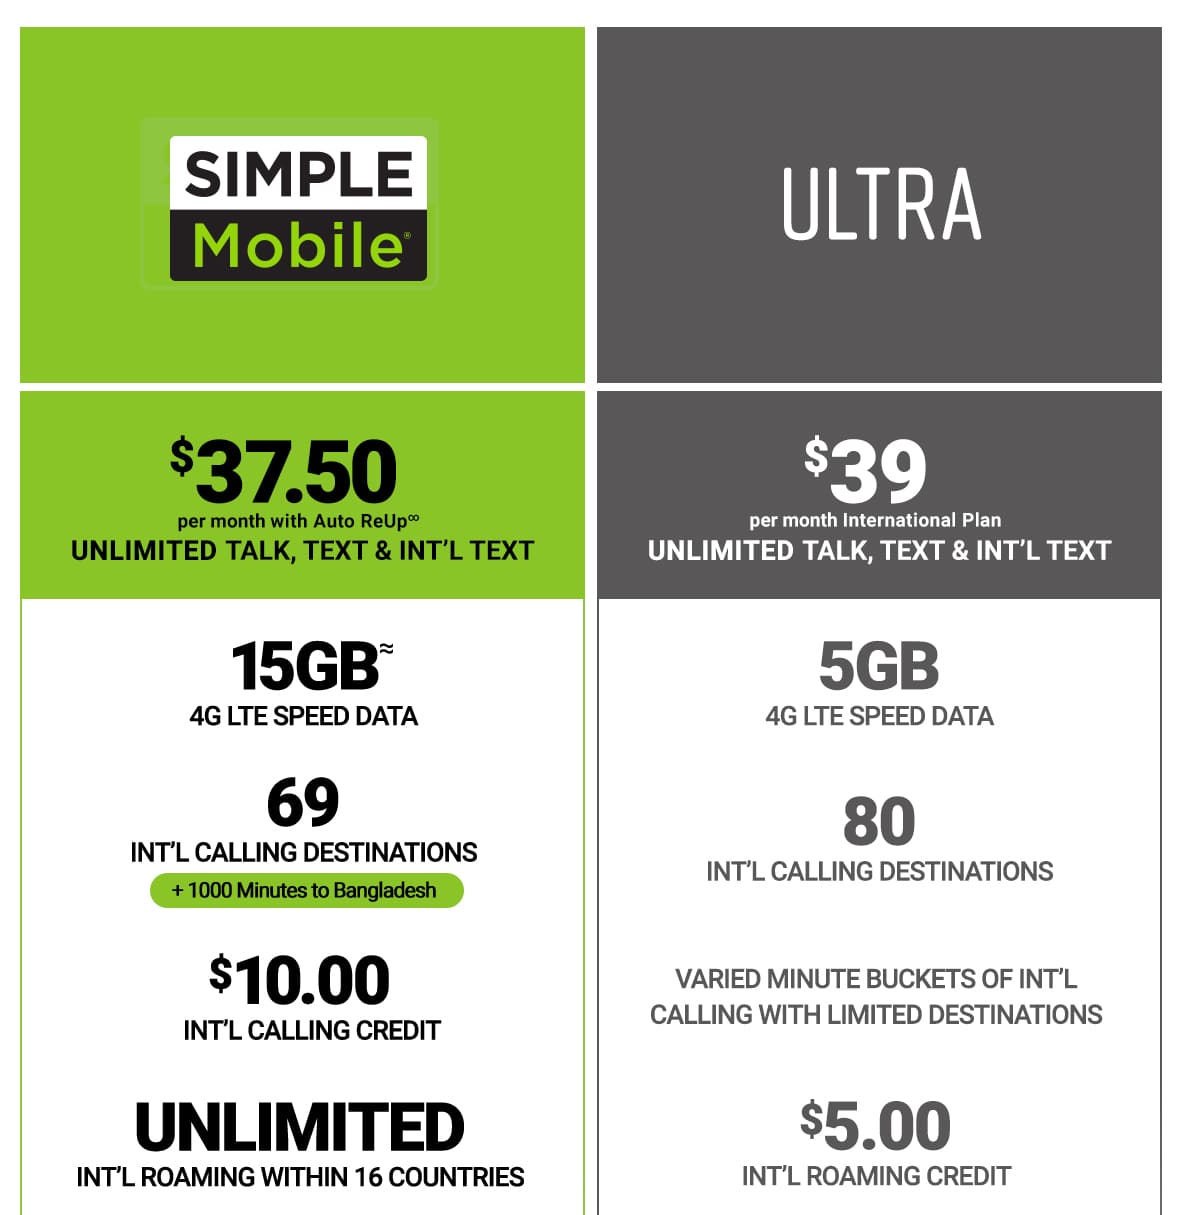 Simple Mobile vs. Ultra